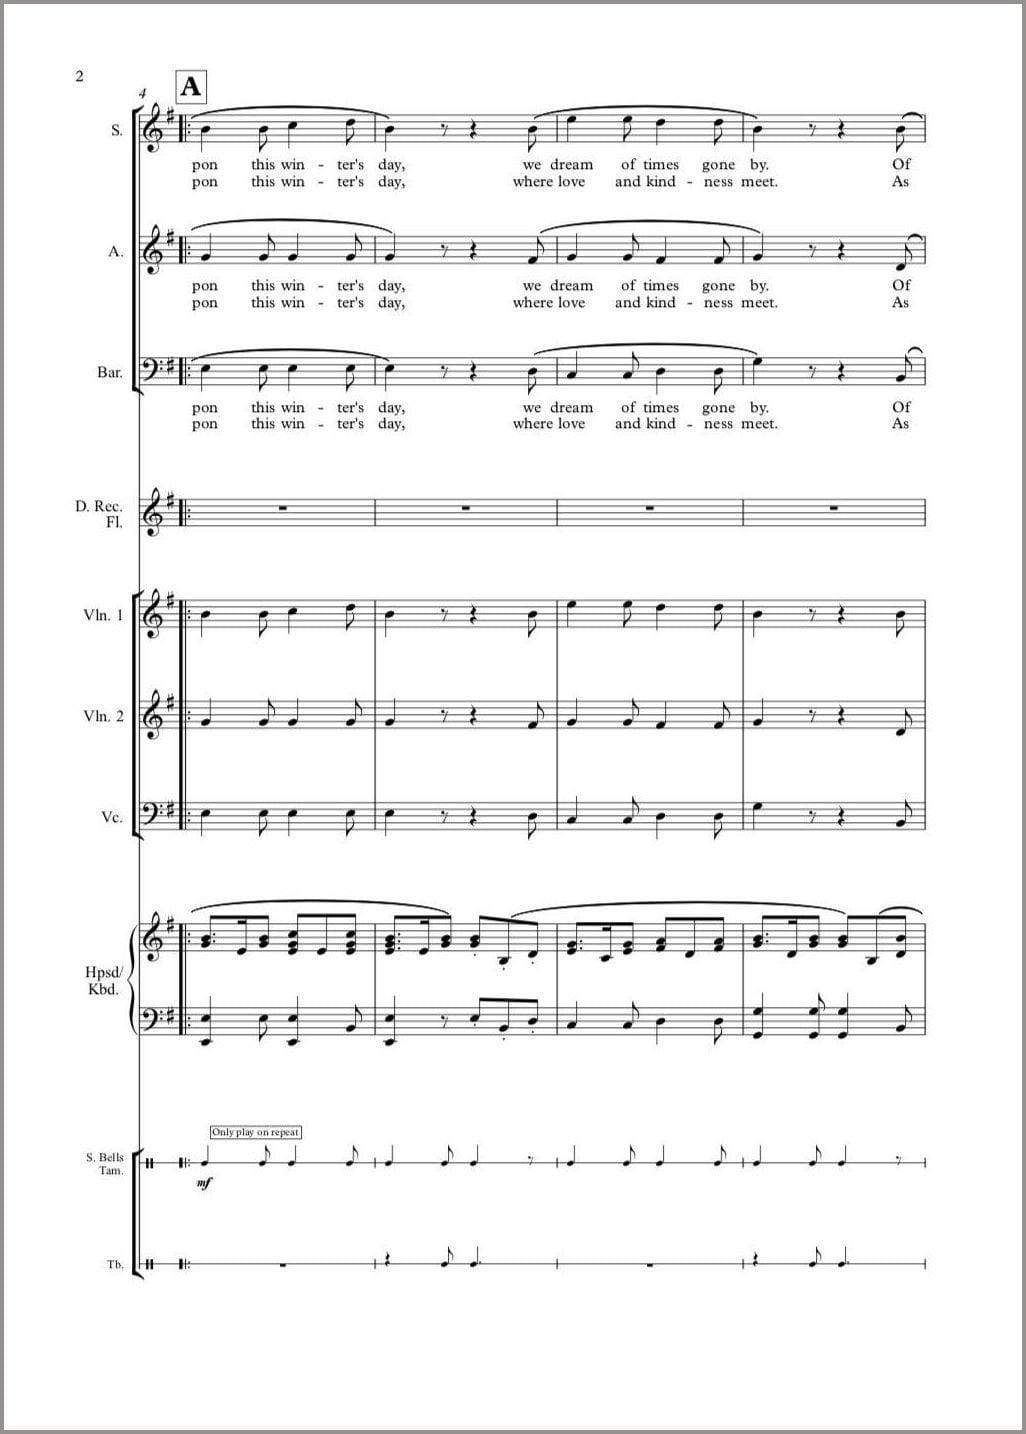 A Madrigal Christmas - Paul Barker Music 